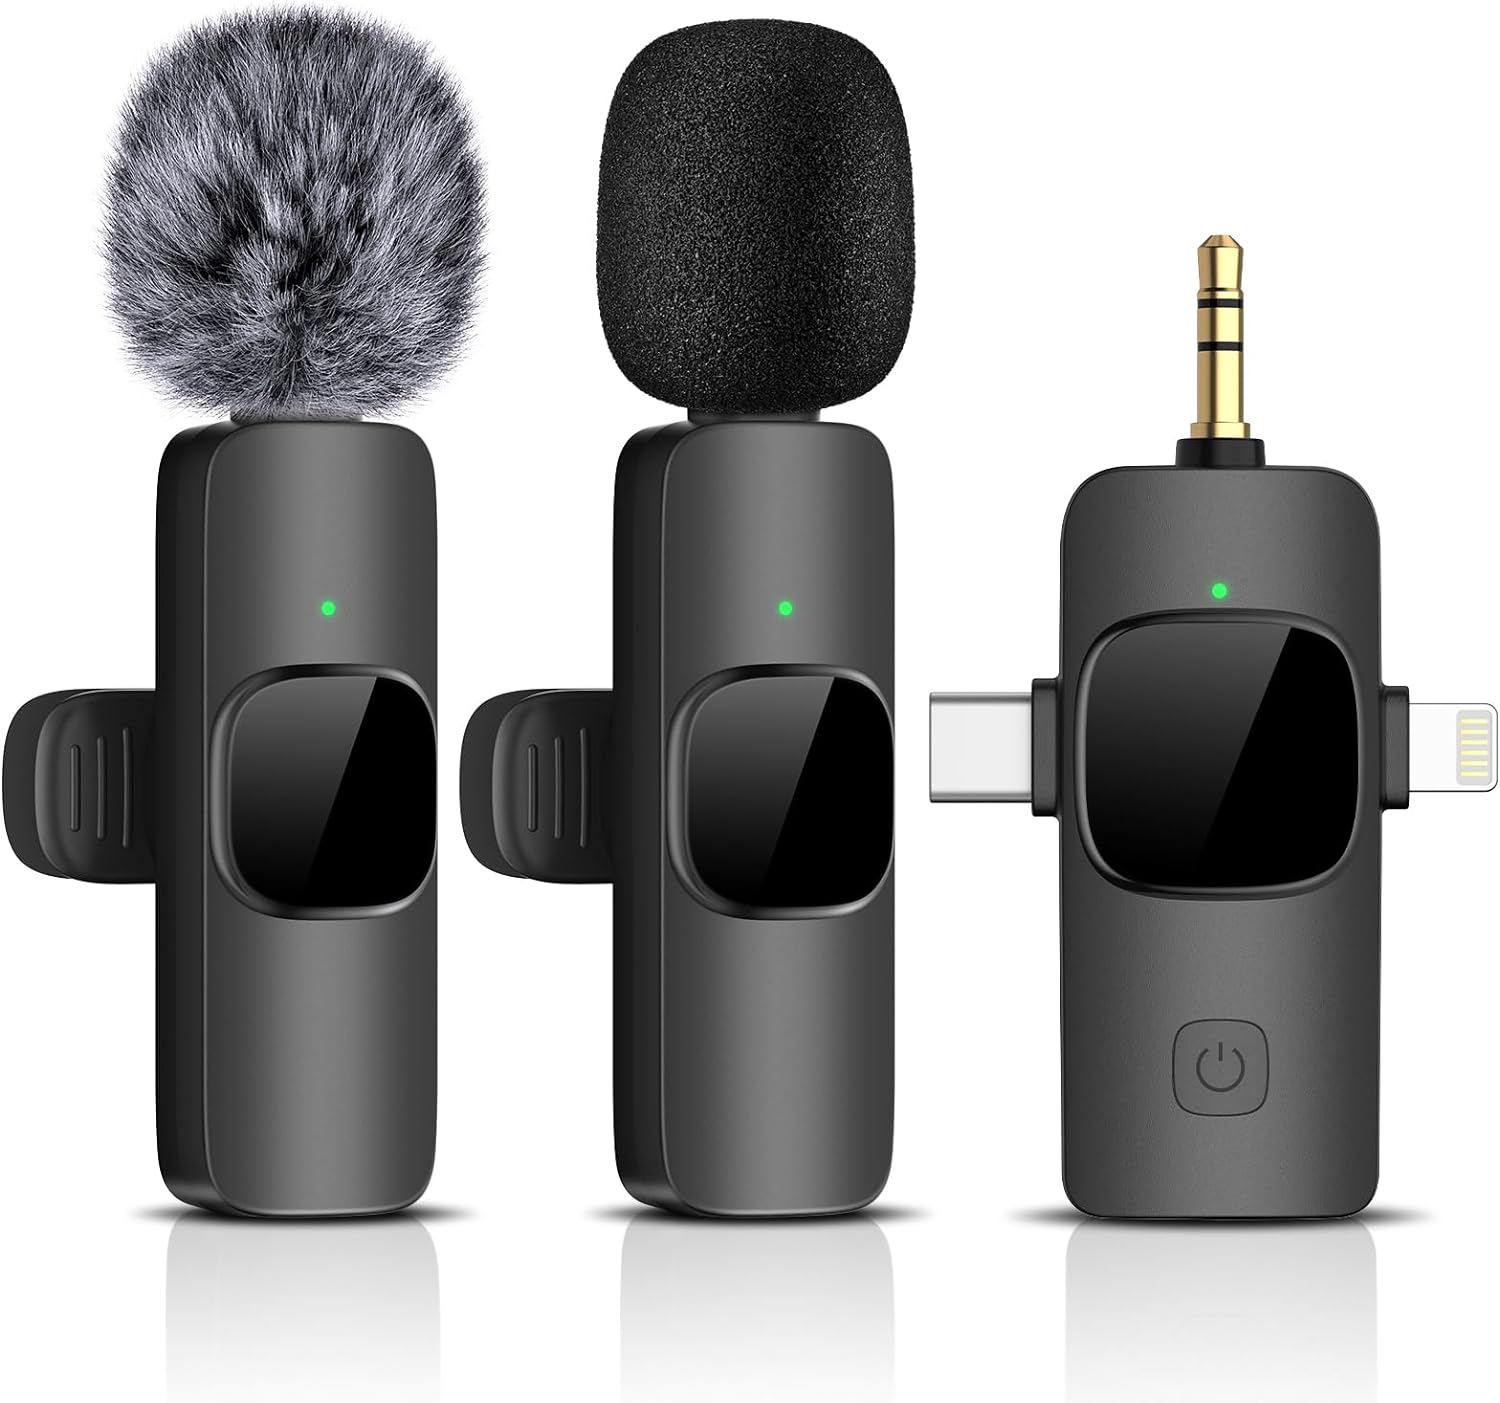 Micrófono Lavalier inalámbrico para iPhone, teléfono Android, cámara, -  VIRTUAL MUEBLES